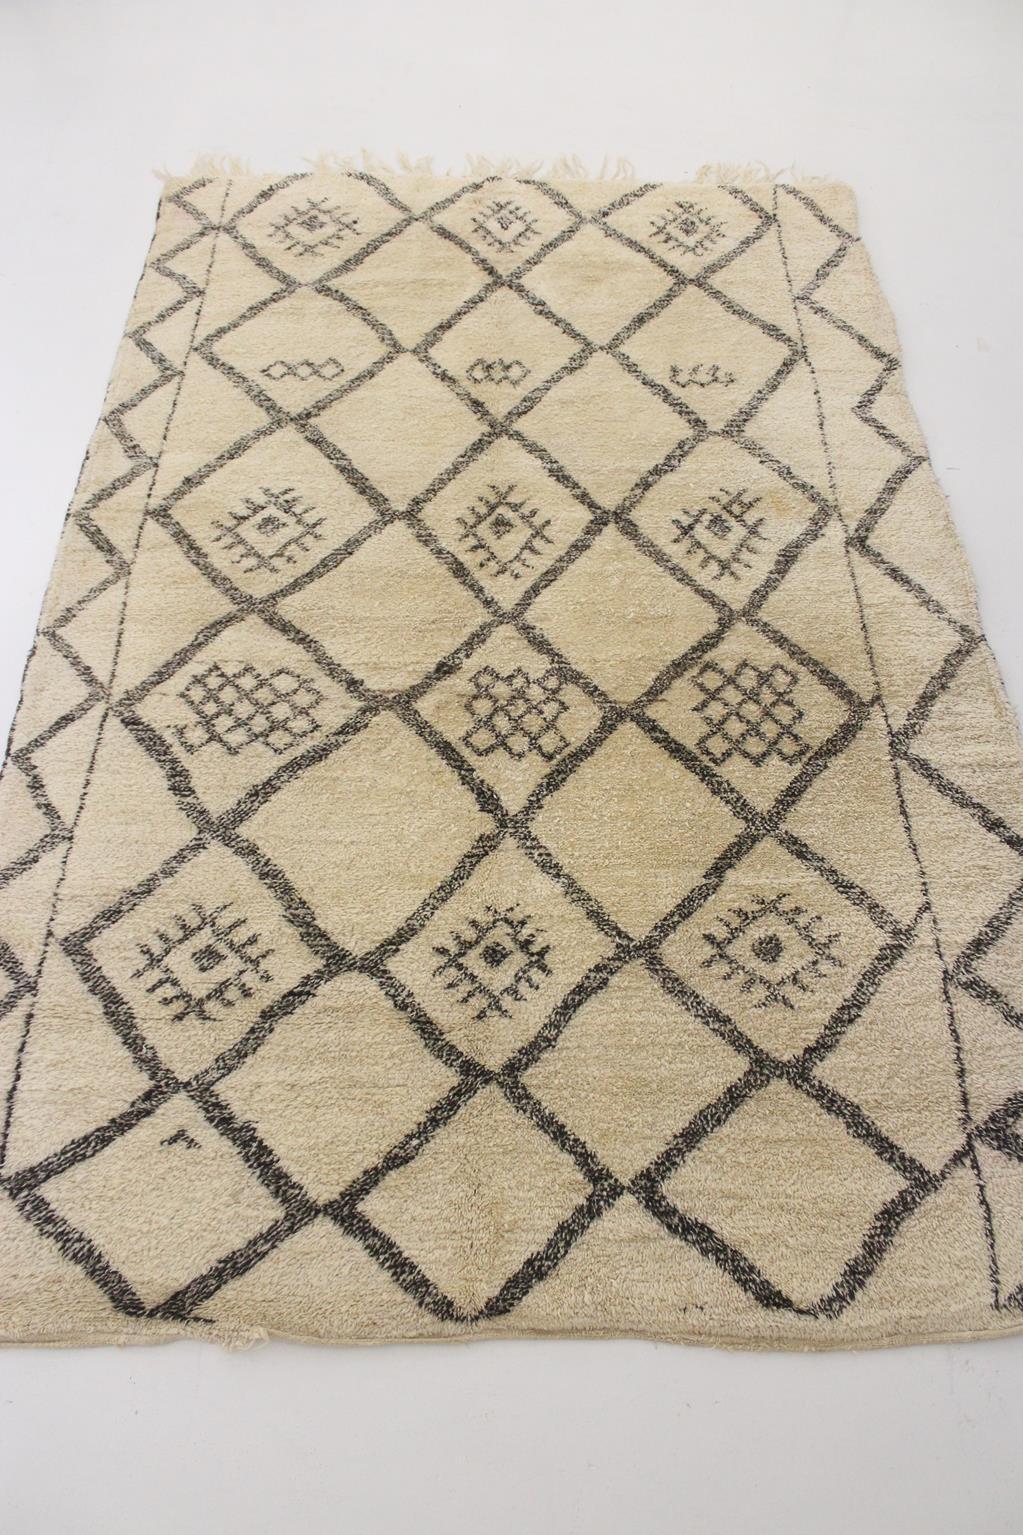 Vintage Moroccan Beni Ourain rug - Beige/black - 5.9x9.5feet / 180x290cm For Sale 4